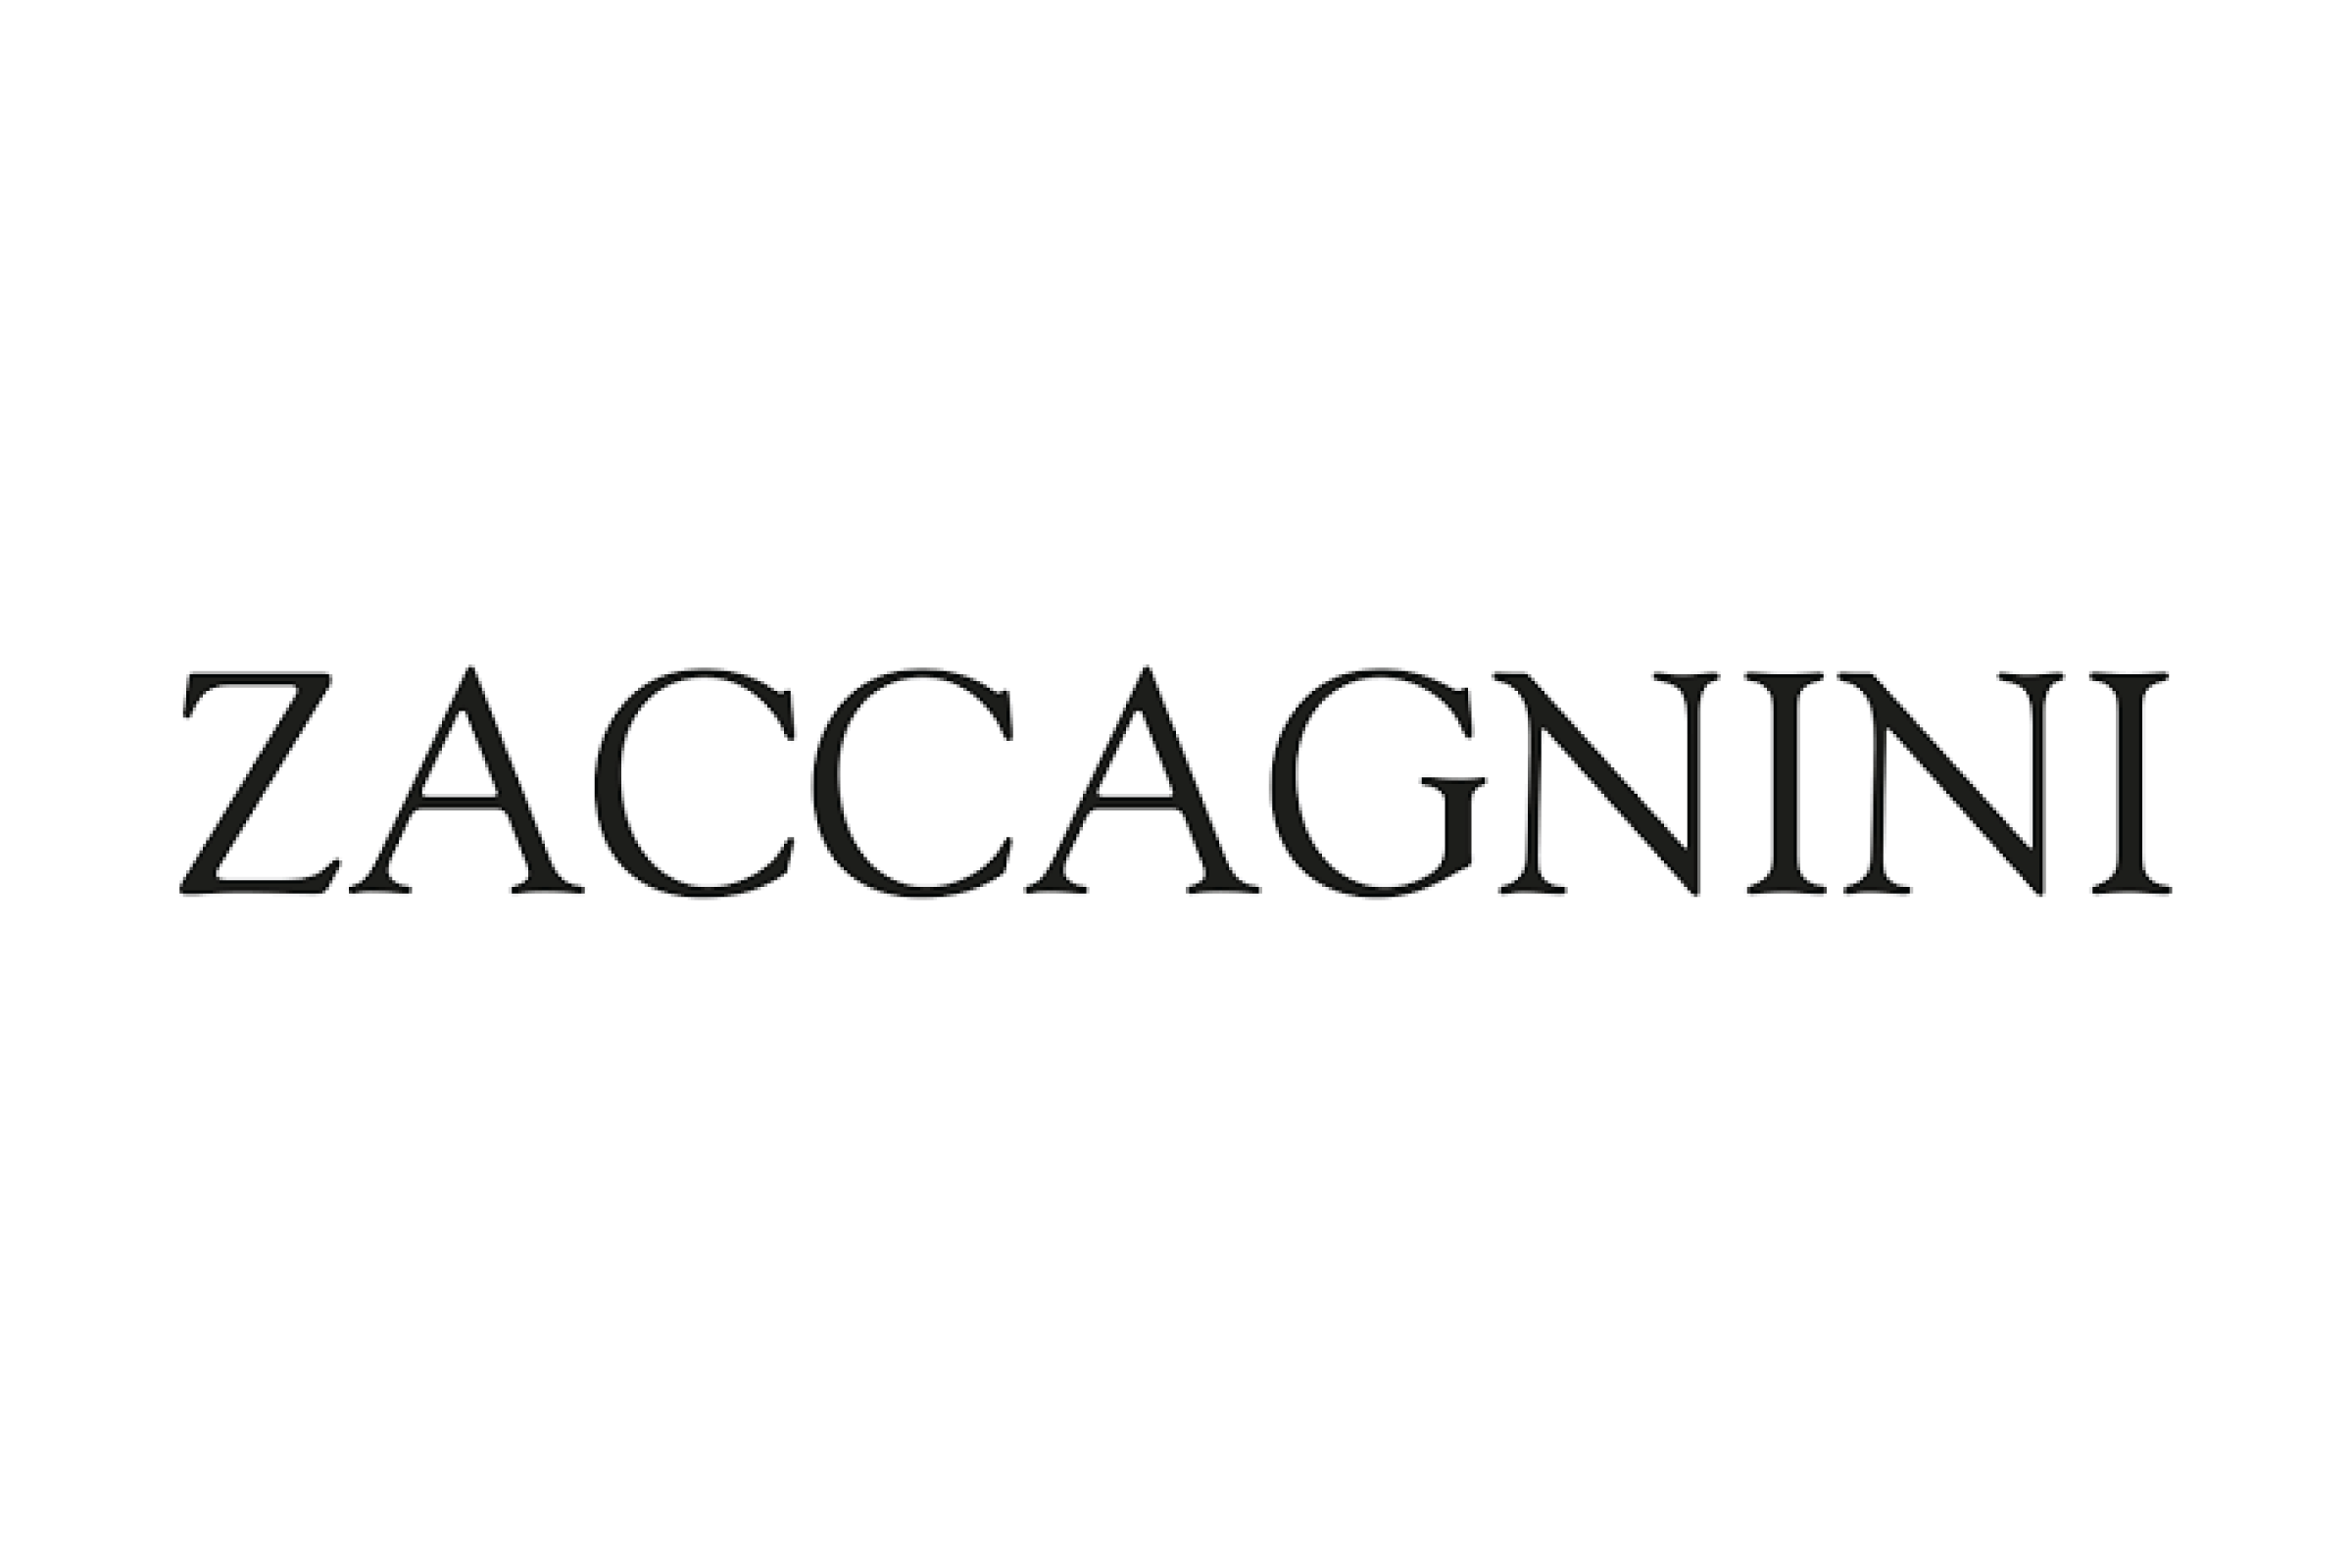 zaccagnini-01.png